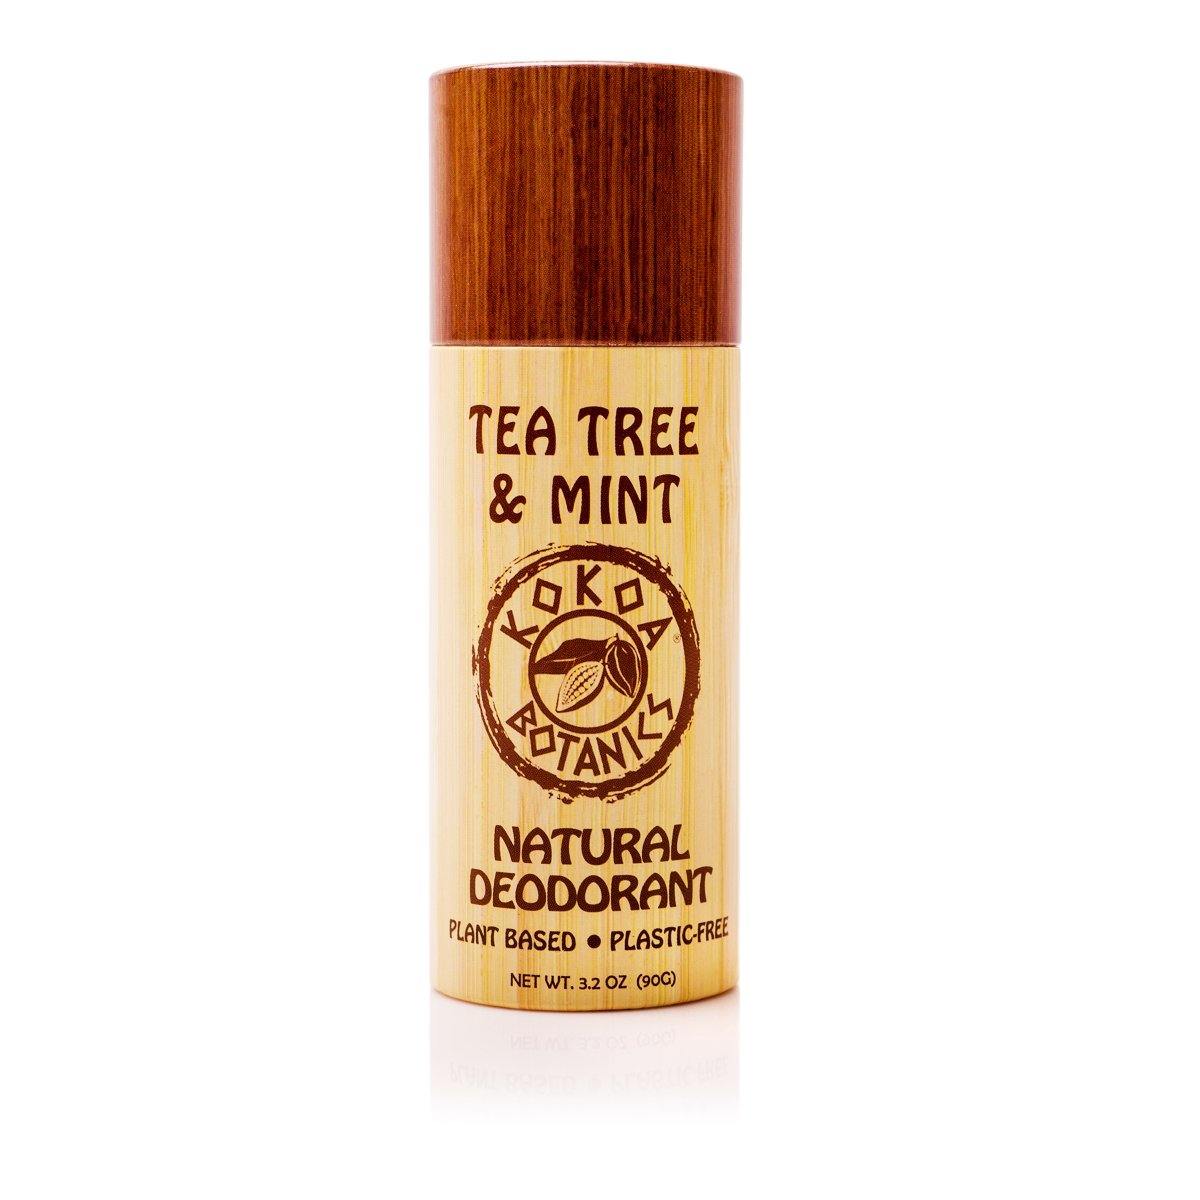 TEA TREE & MINT - Natural Detox Deodorant - Aluminum-Free - Plastic-Free - kokoabotanics